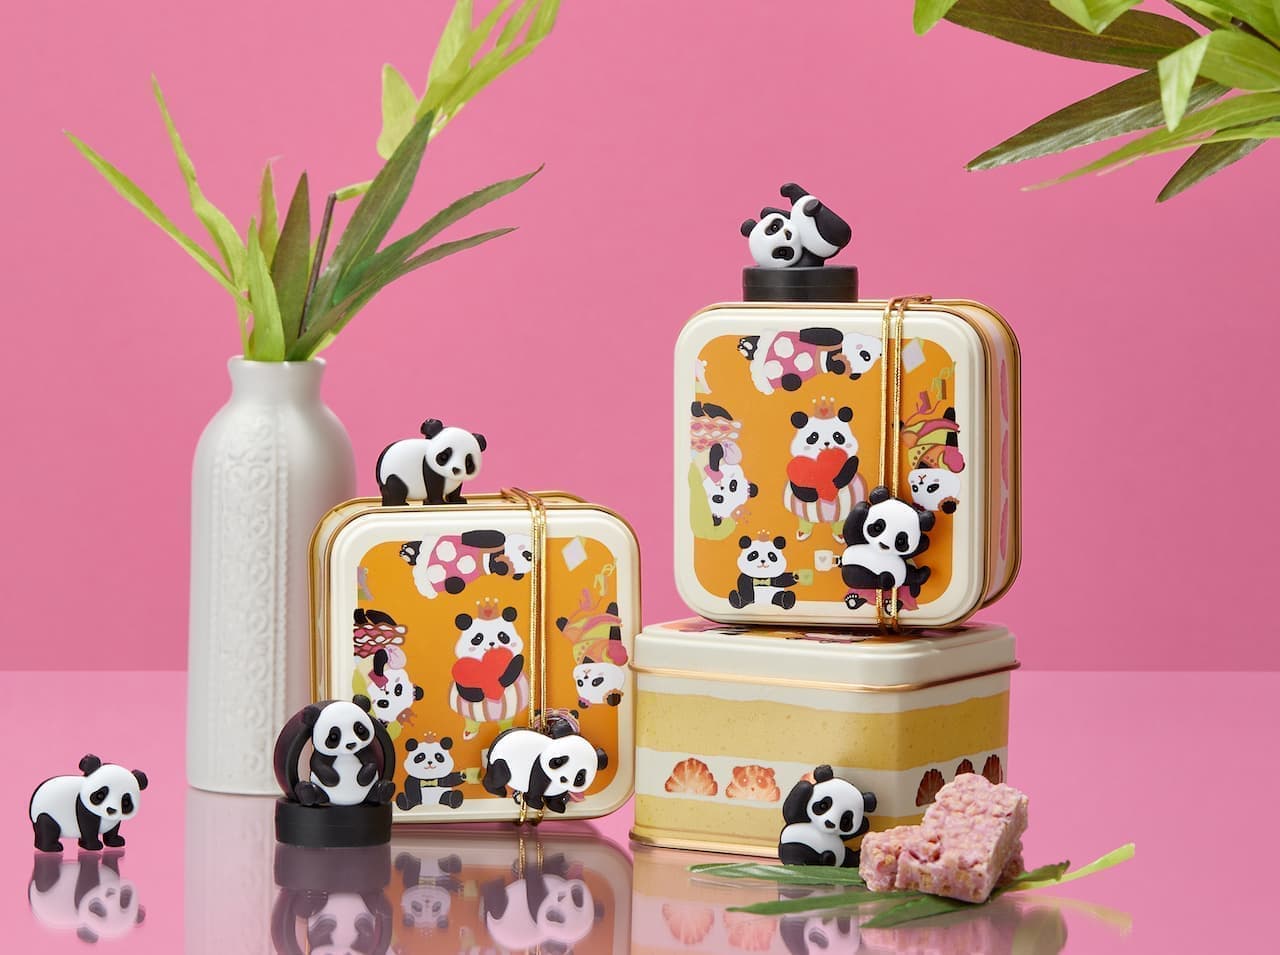 Panda Cake Tin with Panda Button" from Aoyama DeCarbo